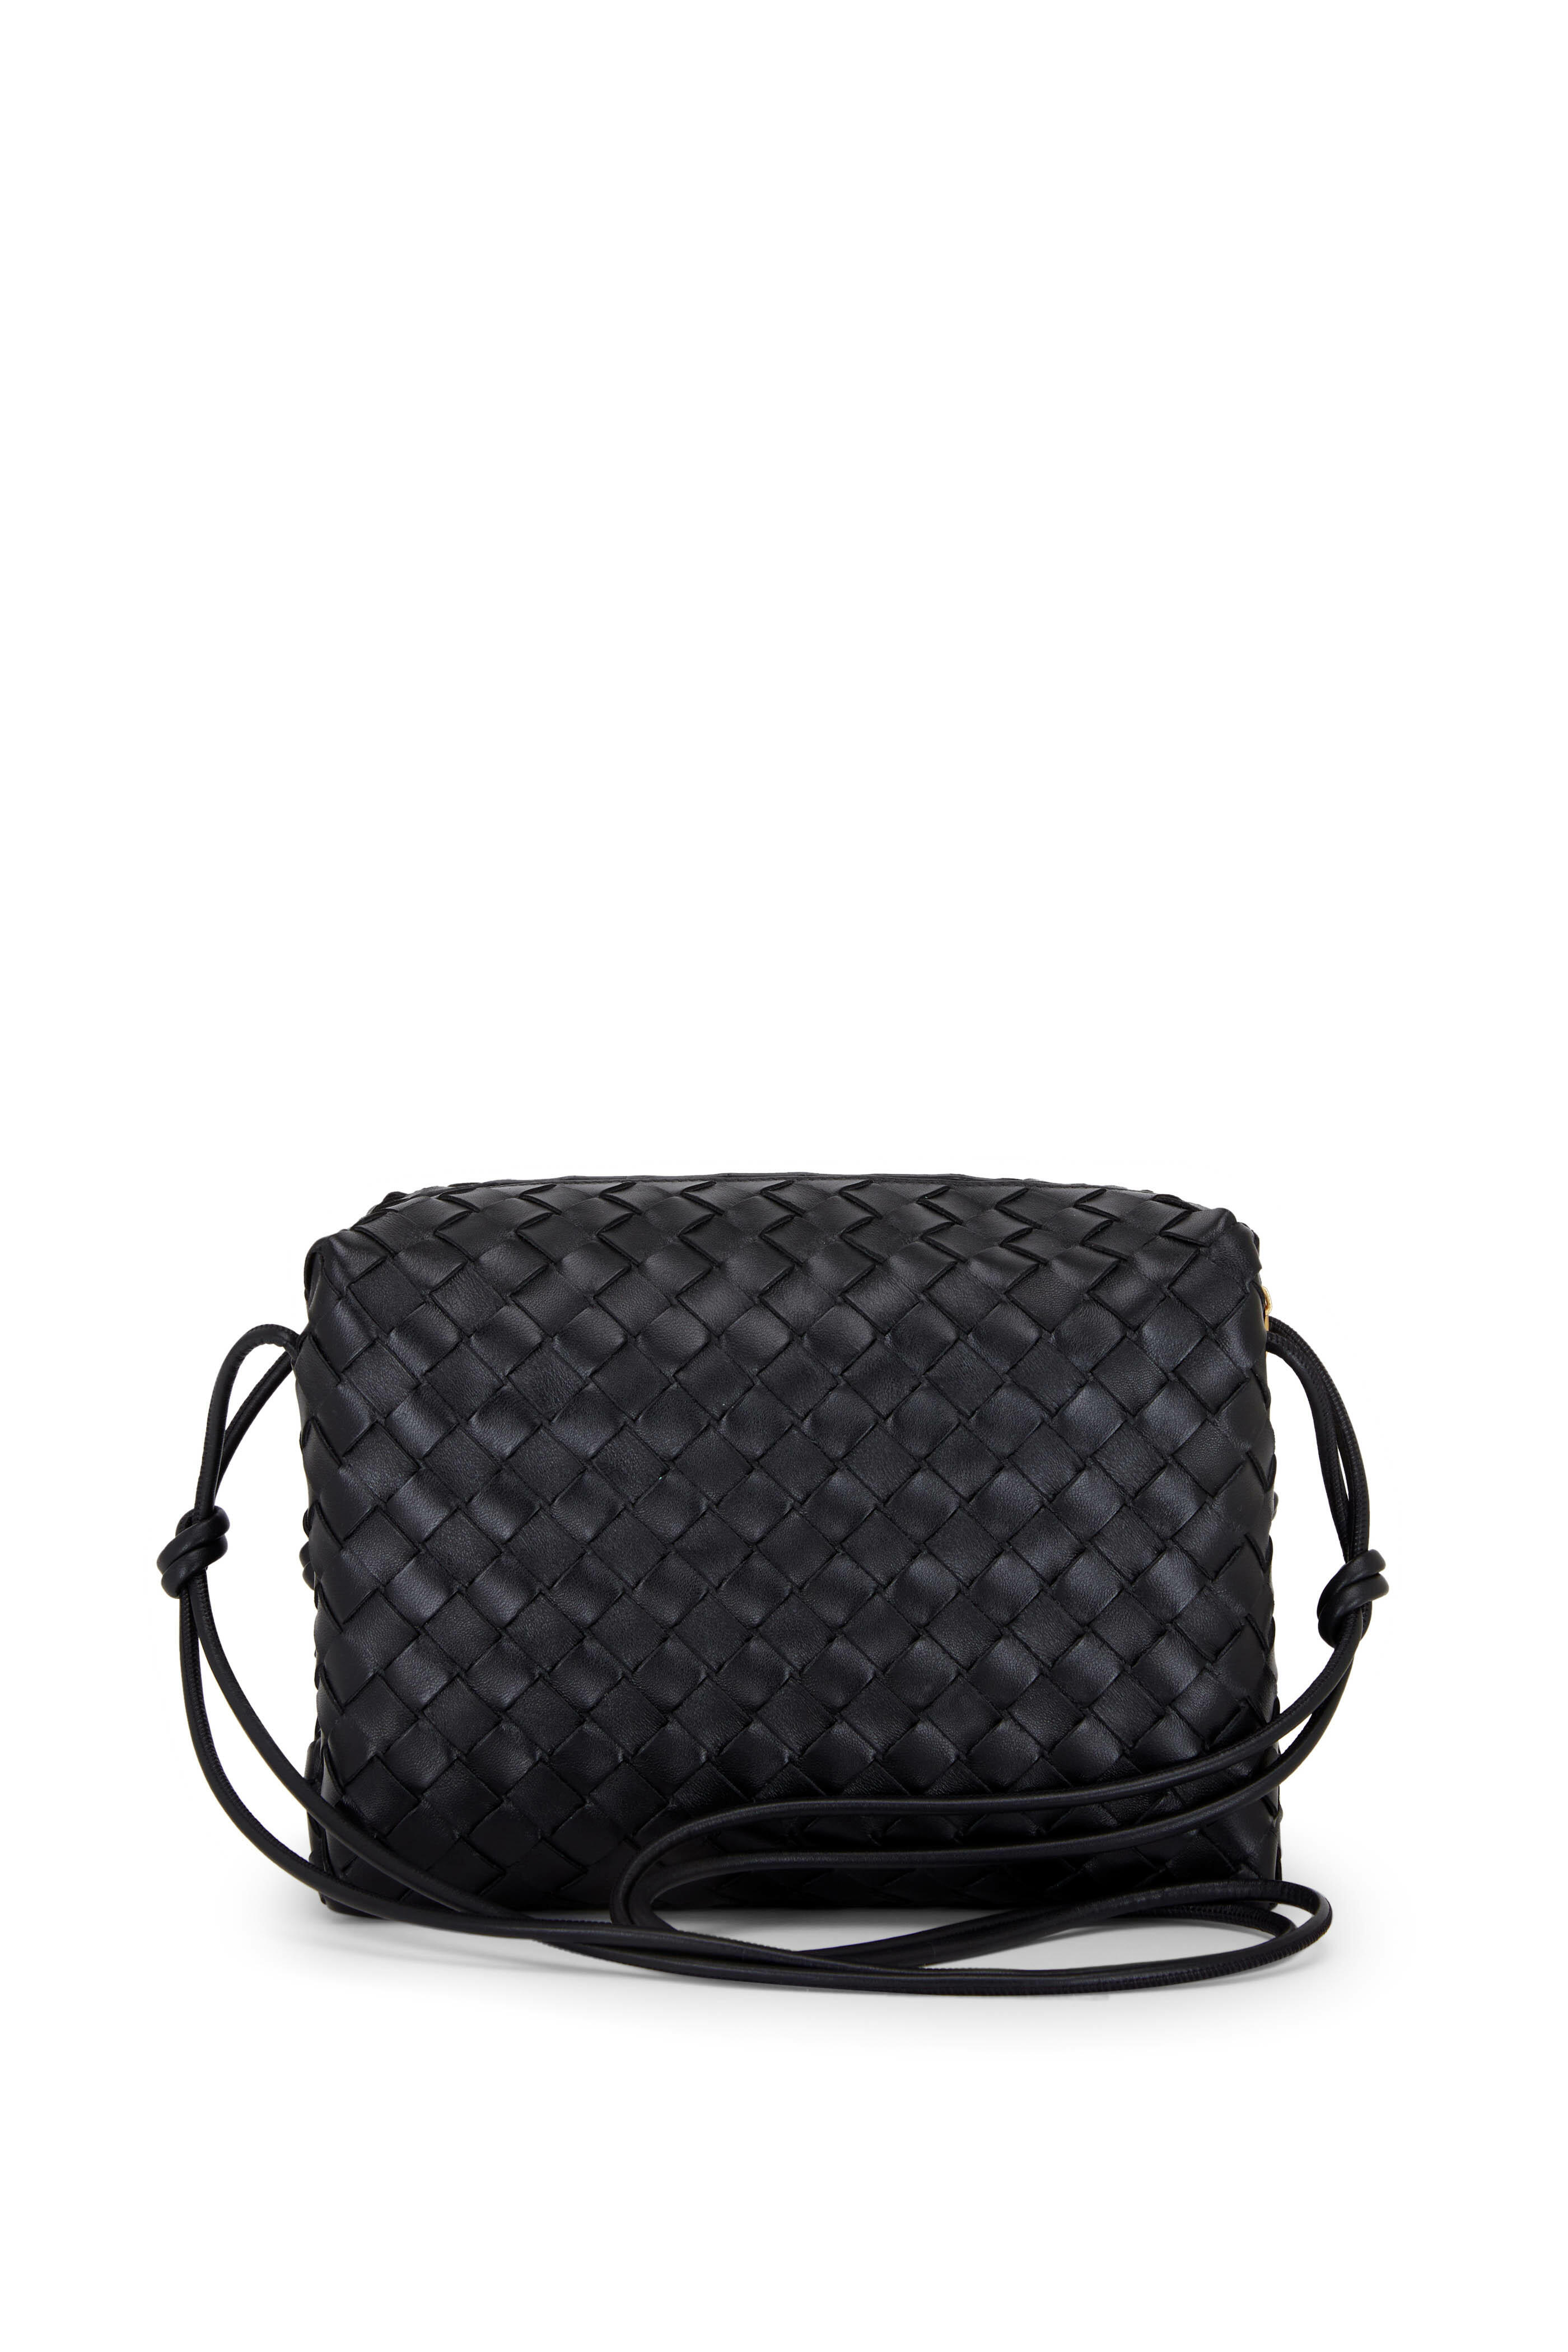 Bottega Veneta Nodini Woven Leather Crossbody Bag in Black